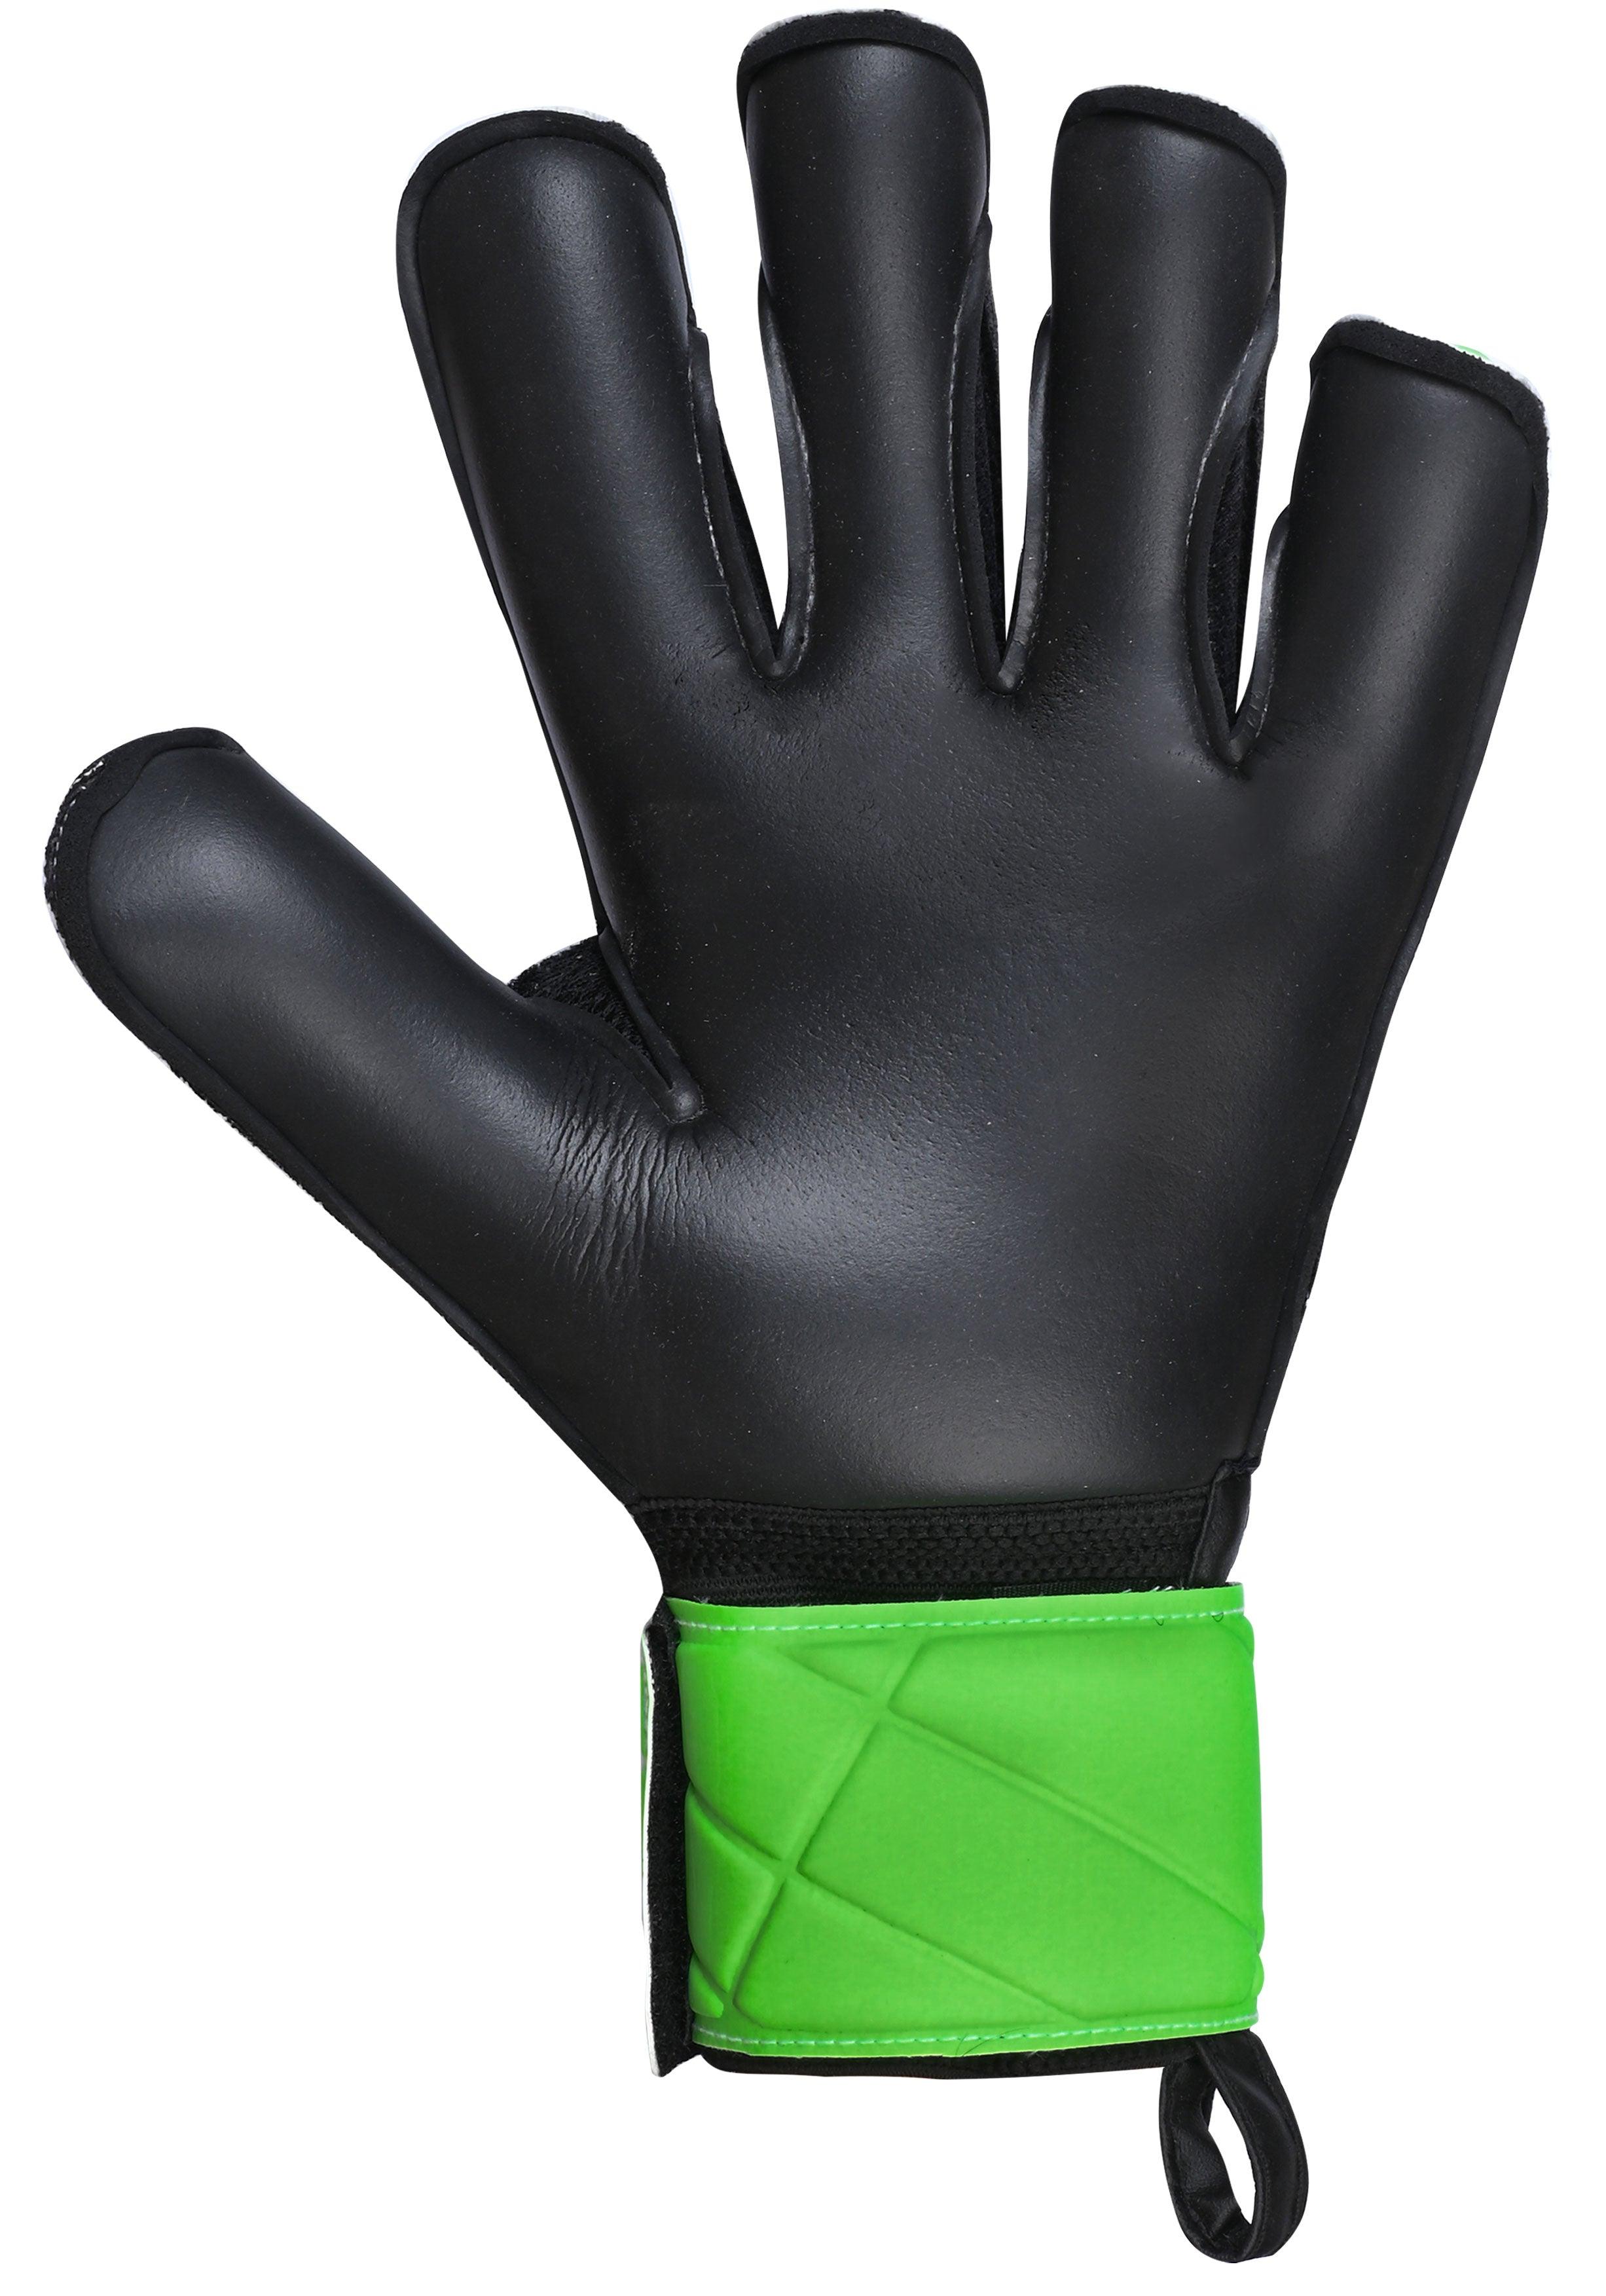 Green SP 2.0 kids goalkeeper gloves